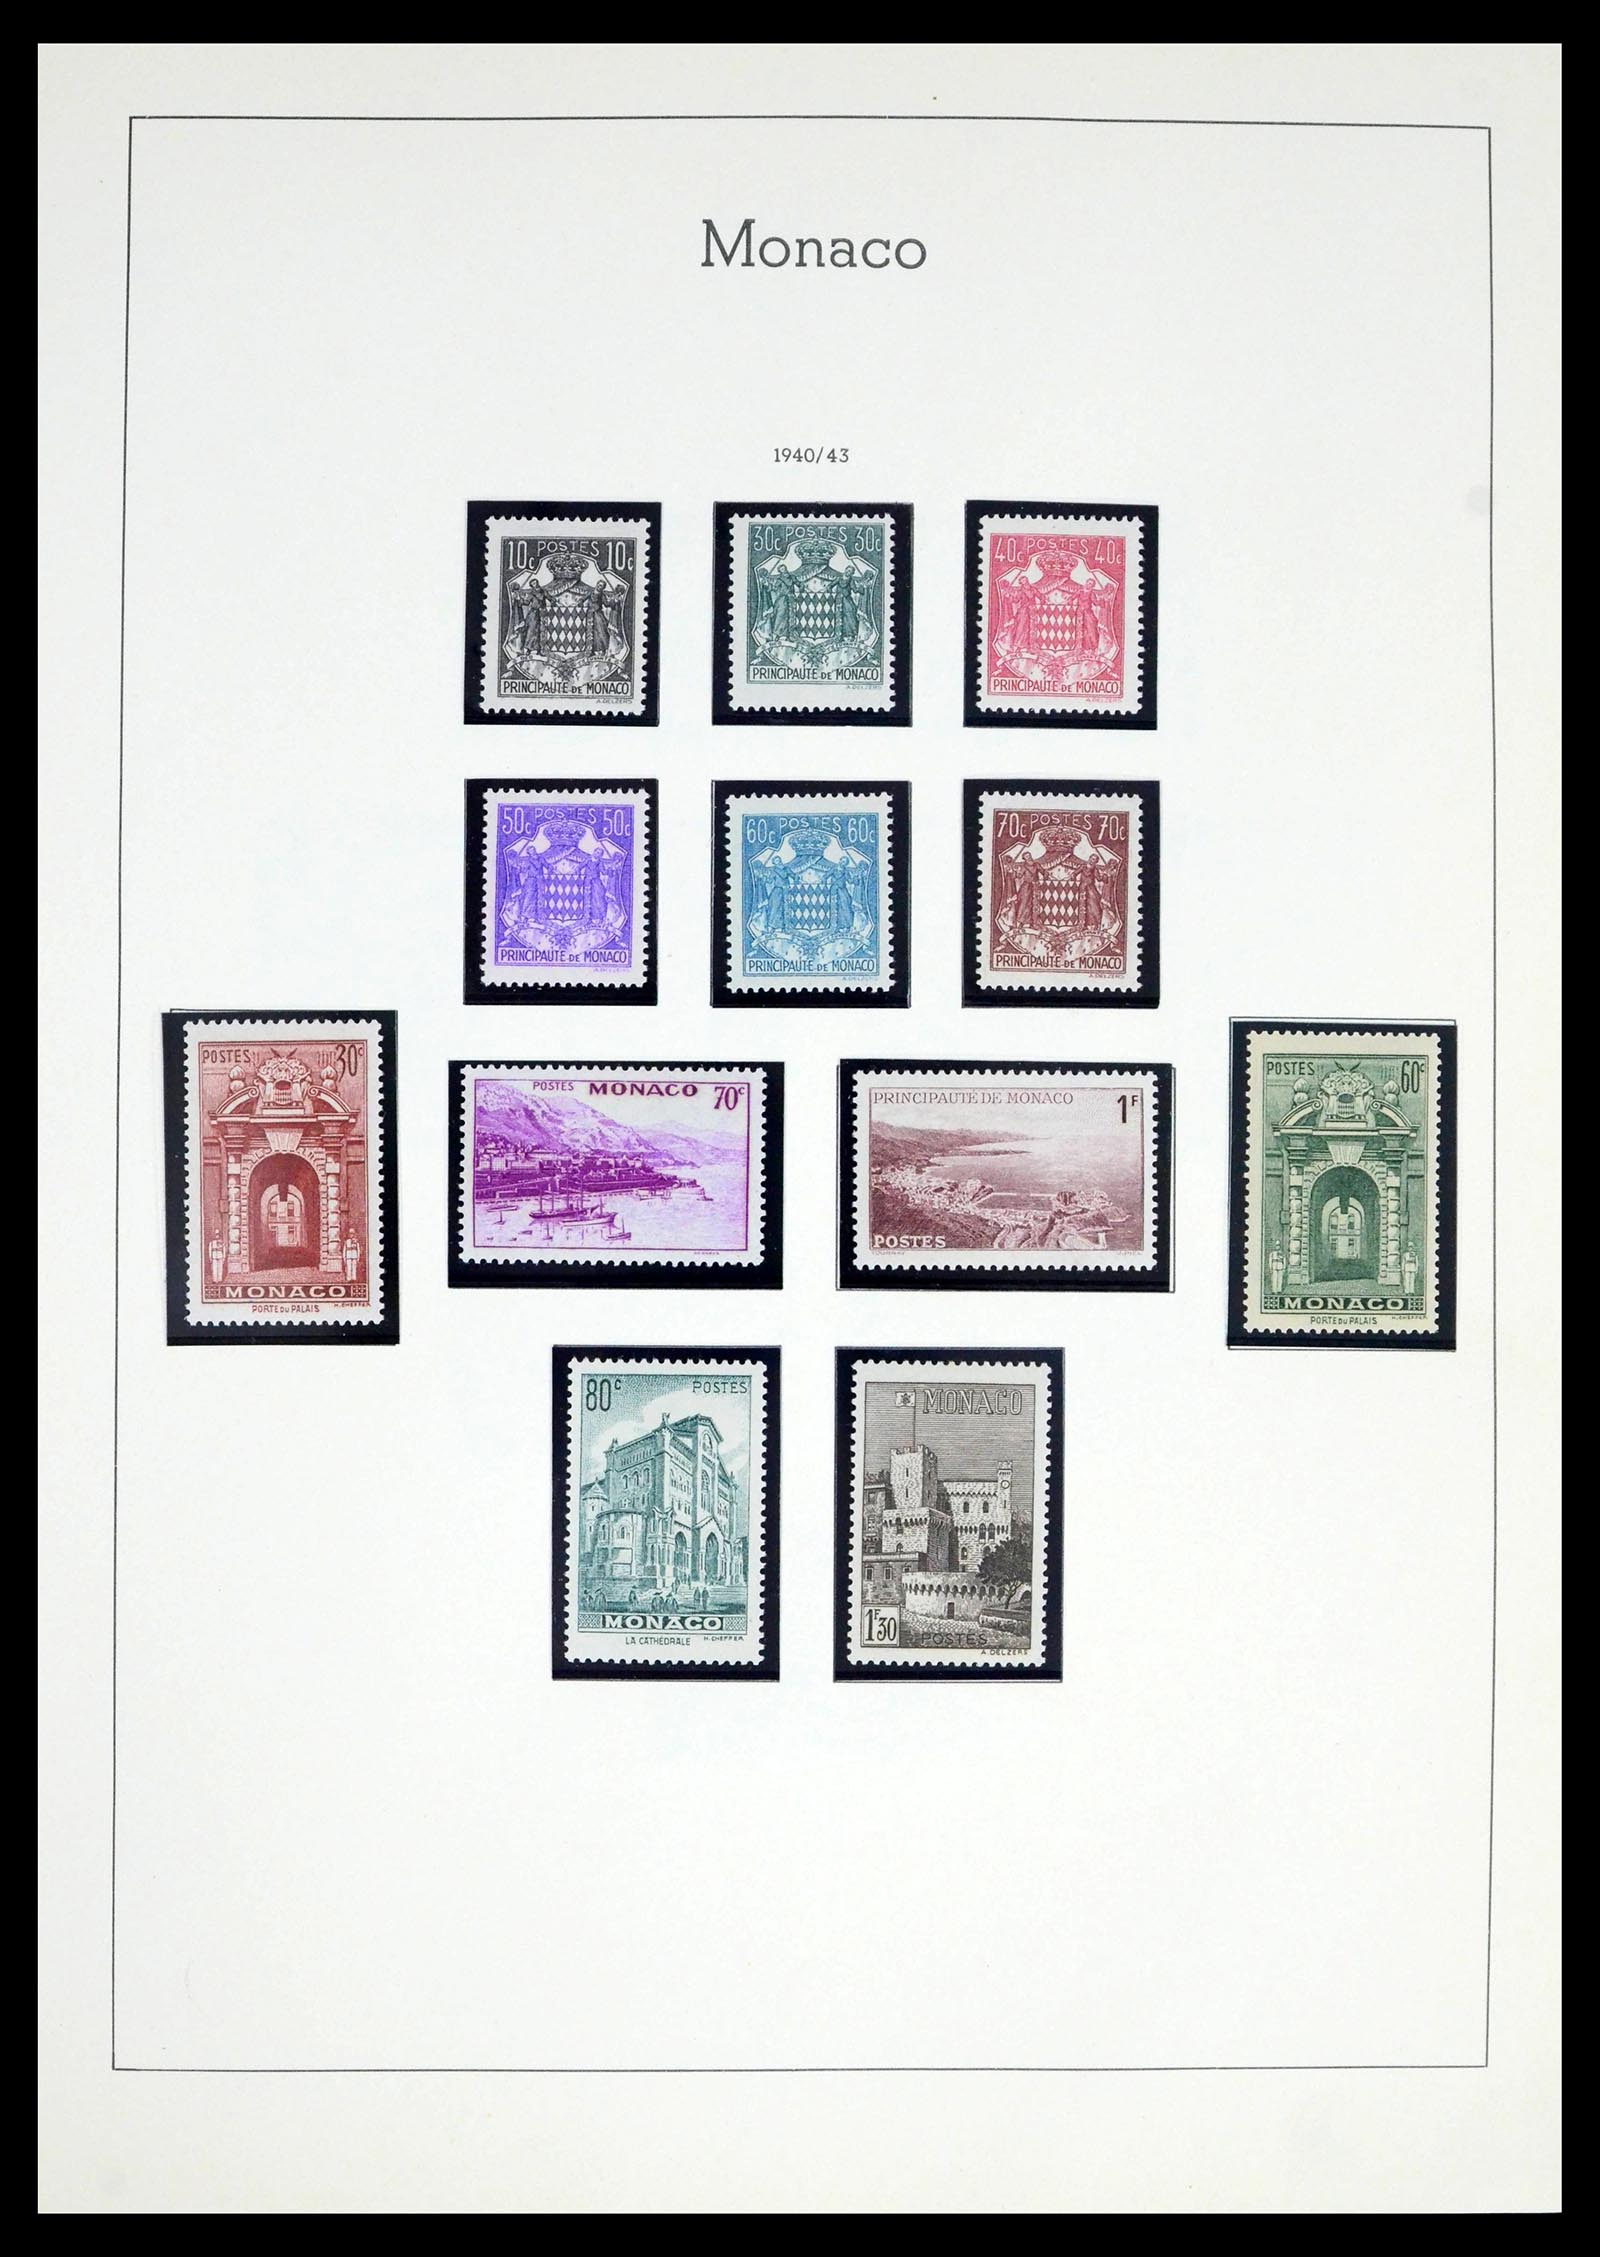 39392 0017 - Stamp collection 39392 Monaco 1885-1999.